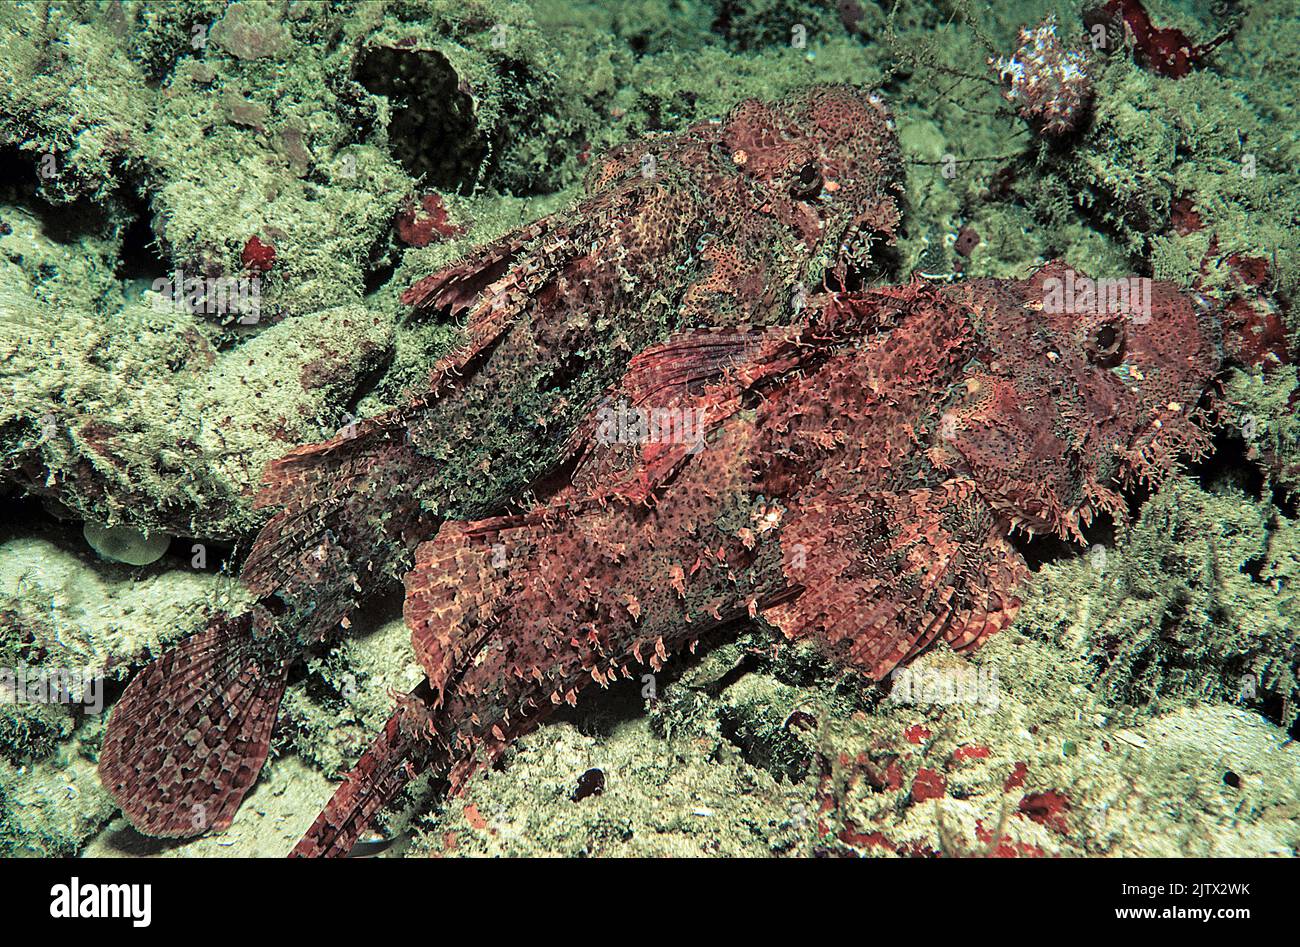 Raggy scorpionsfish or Smallscall Scorpionfish (Scorpaenopsis venosa), pair in a coral reef, Maldives, Indian ocean, Asia Stock Photo